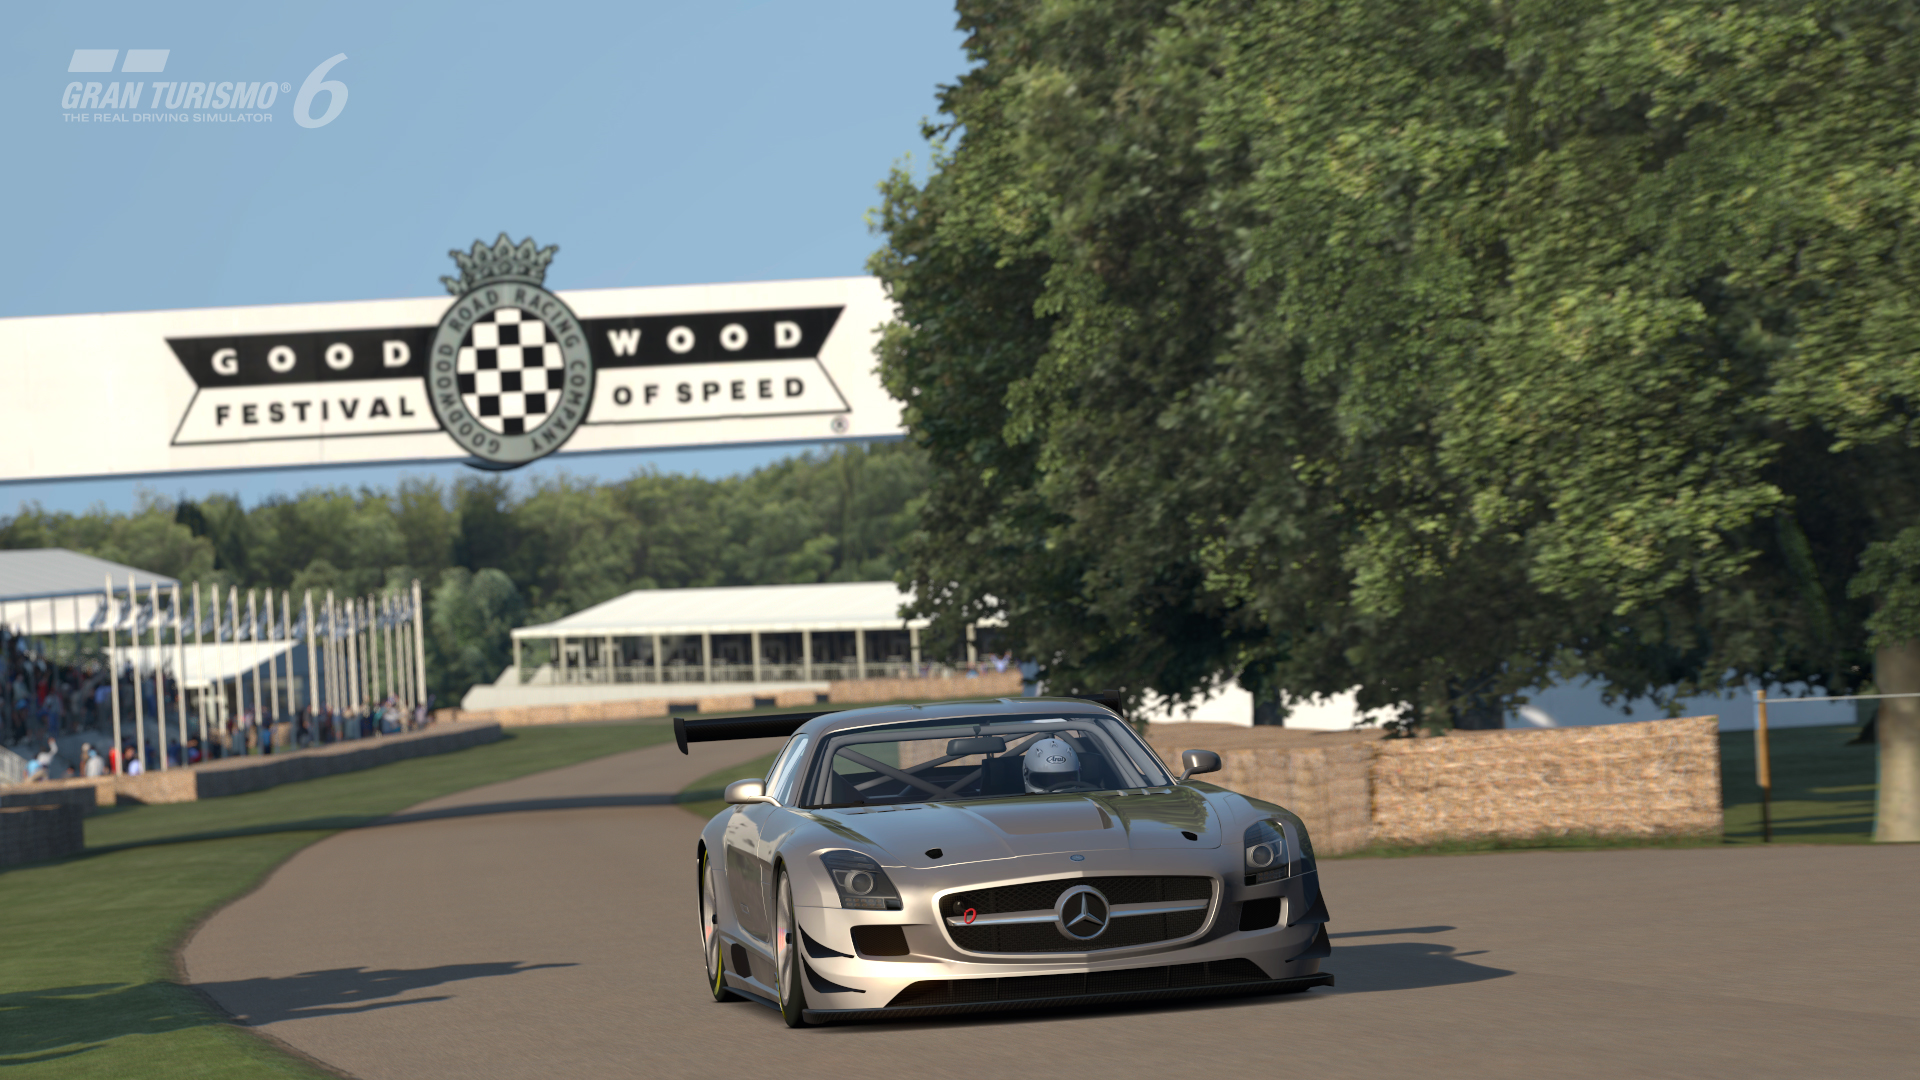 New Online Features & Aerodynamics in Gran Turismo 6 – GTPlanet